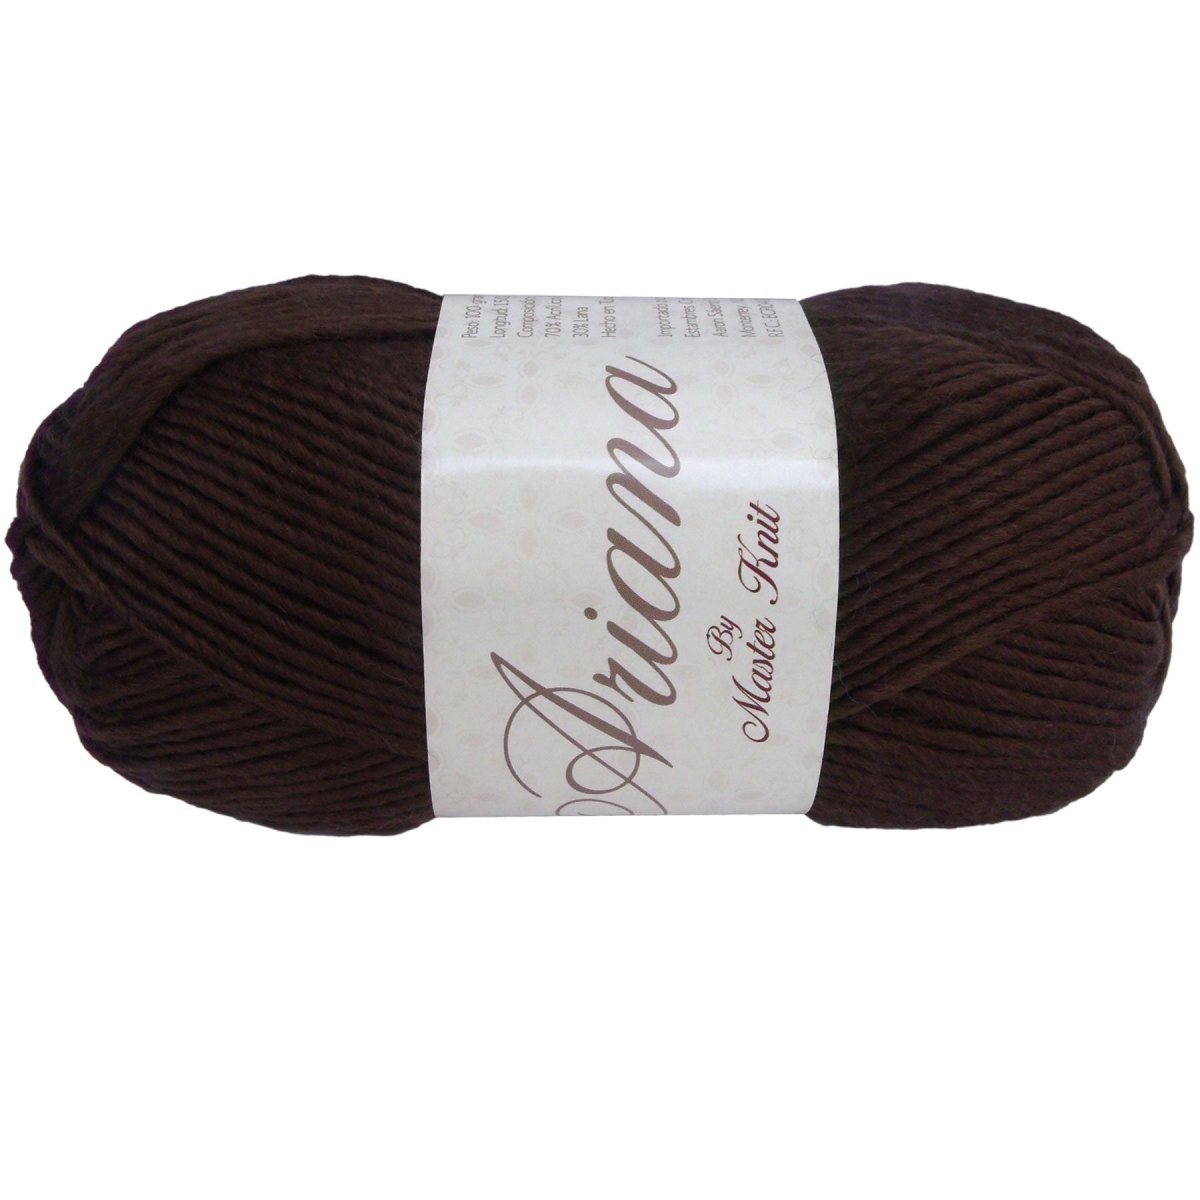 ARIANA - Aran - Crochetstores9510-182